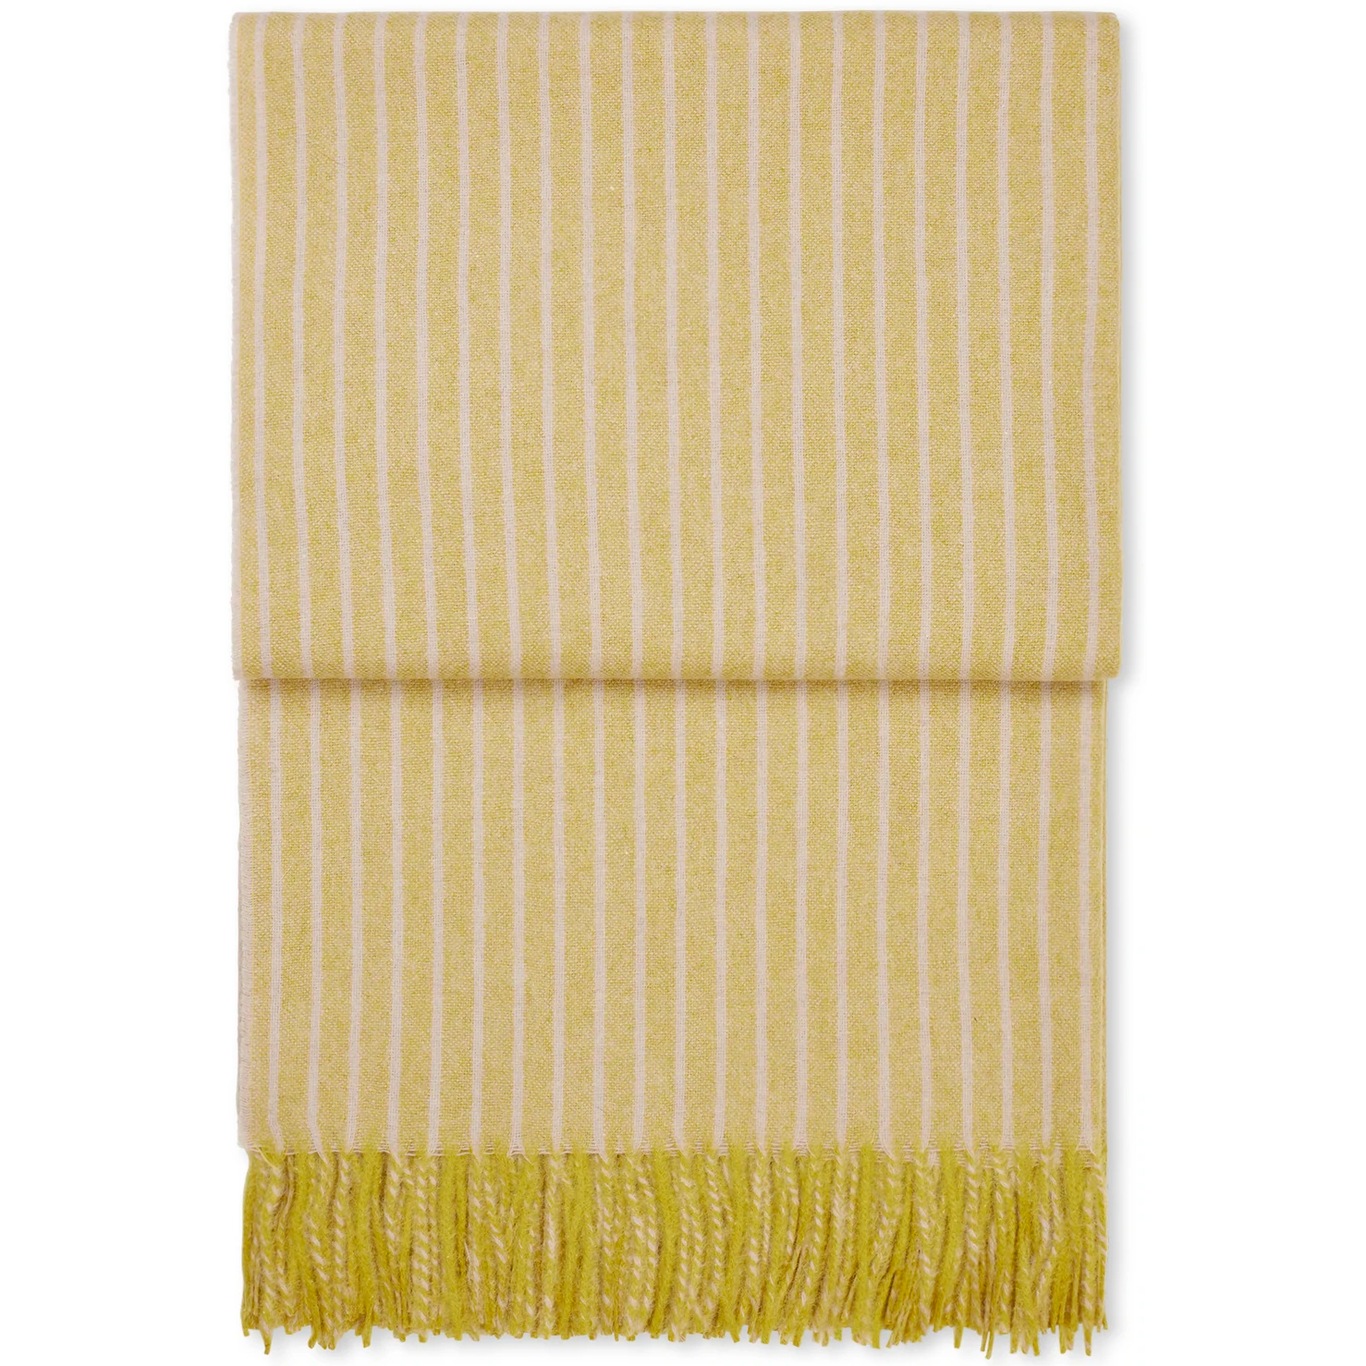 Stripes Throw 130x200 cm, Light Yellow